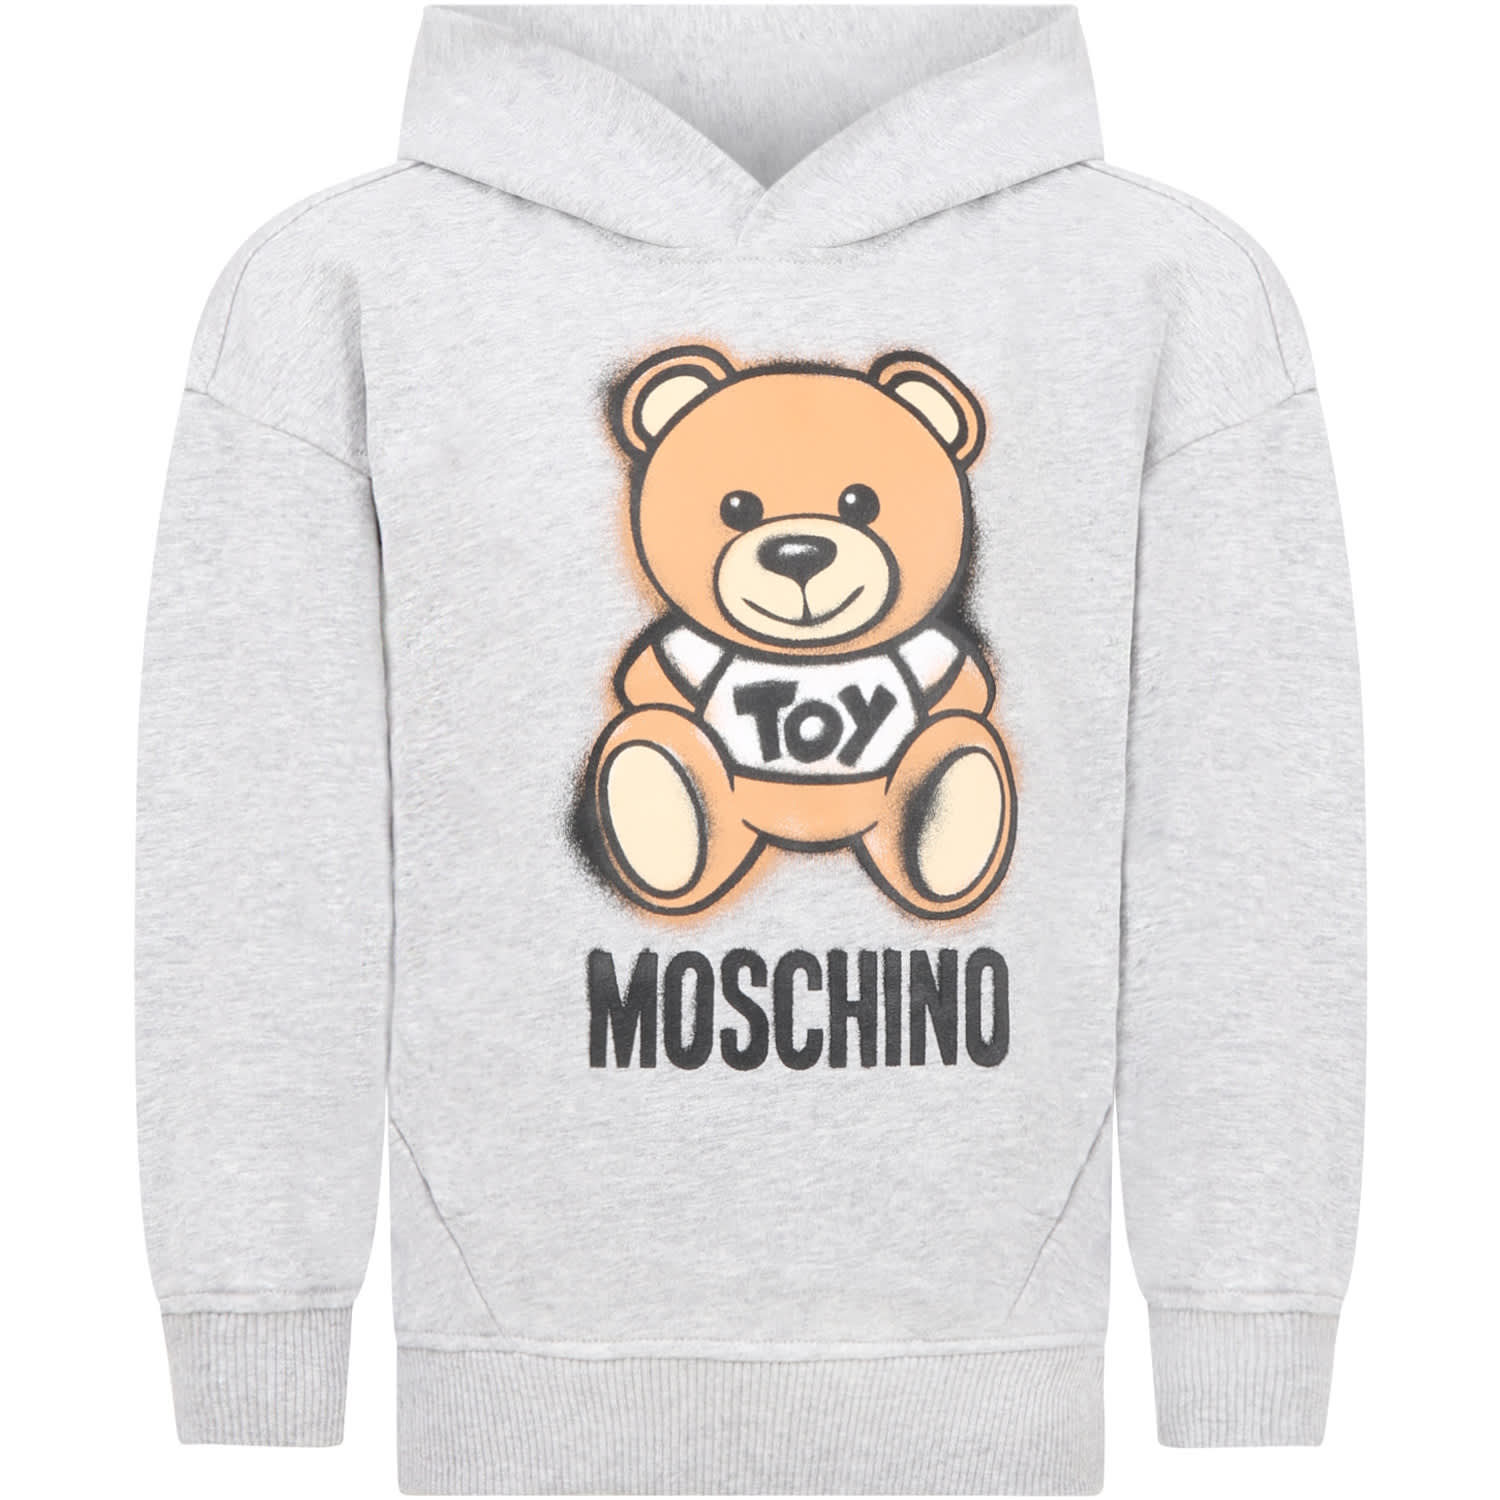 Moschino Grey Sweatshirt For Kids With Teddy Bear